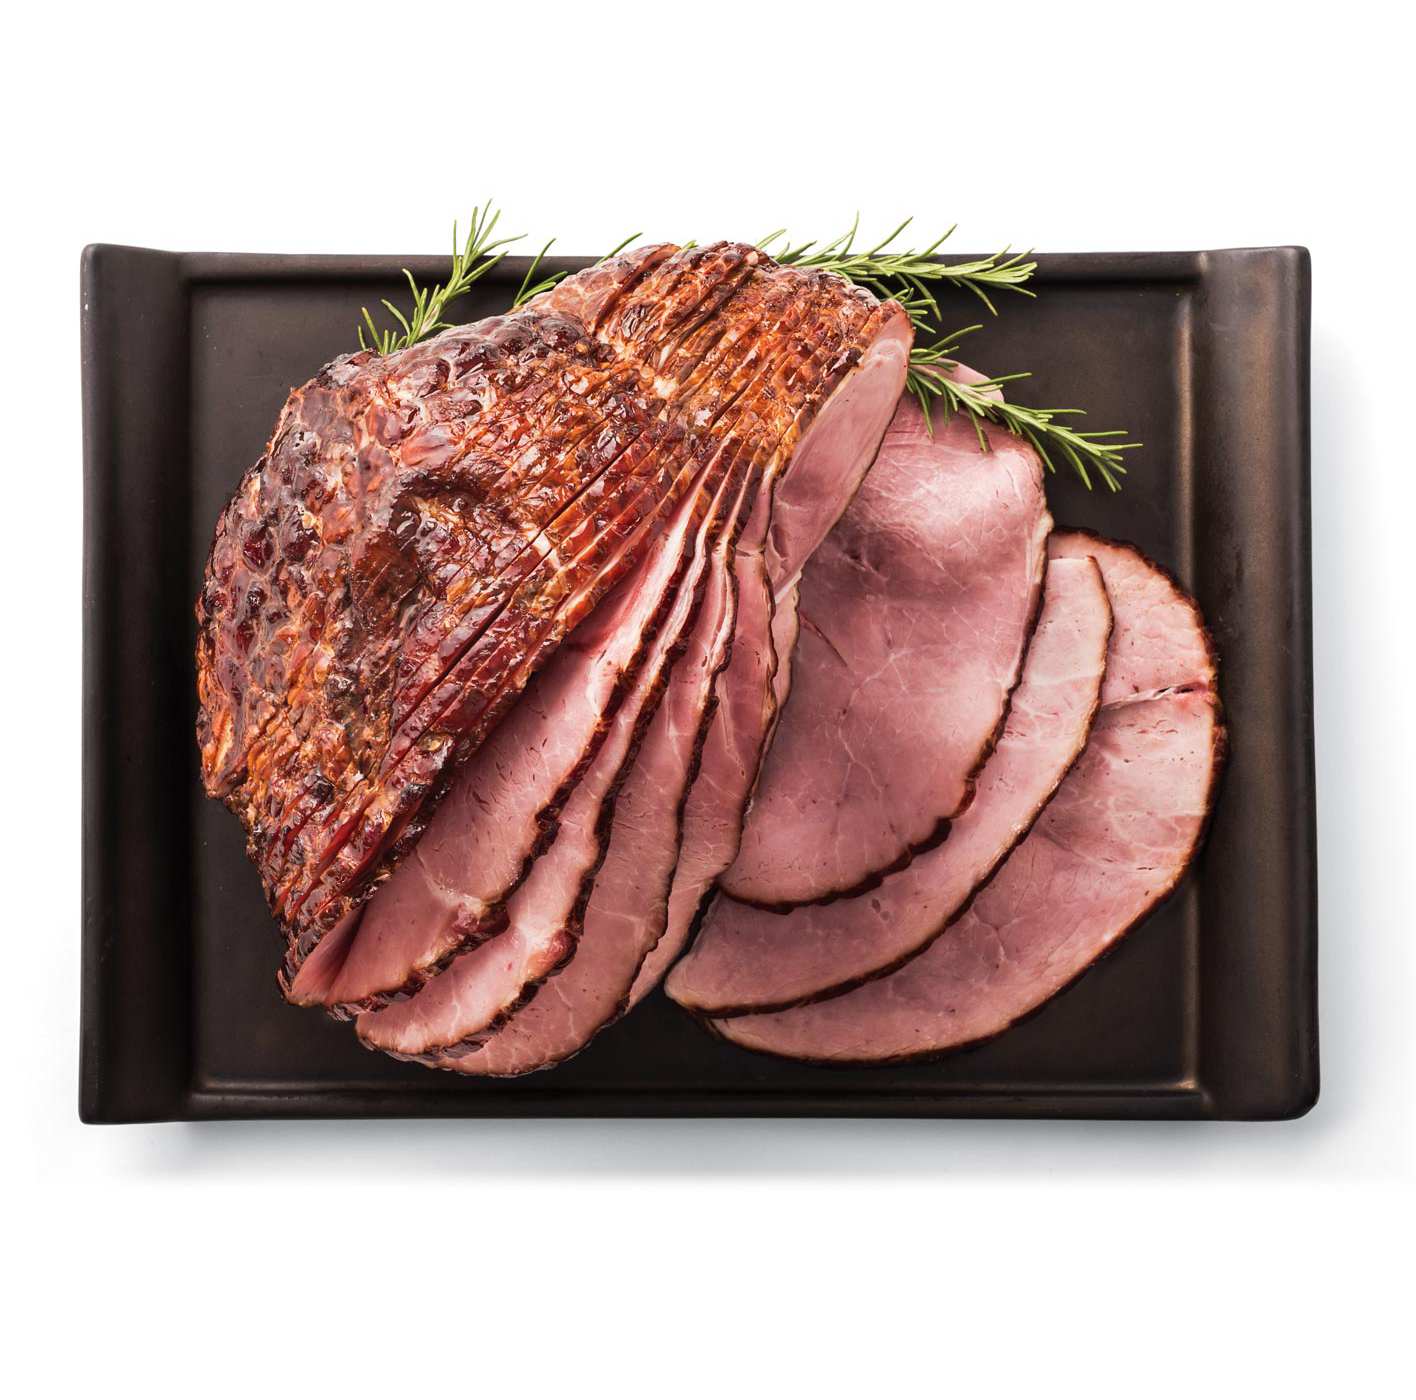 Fire-Glazed Hickory-Smoked Bone-In Spiral Sliced Ham Half, 8-9 lbs.; image 1 of 2